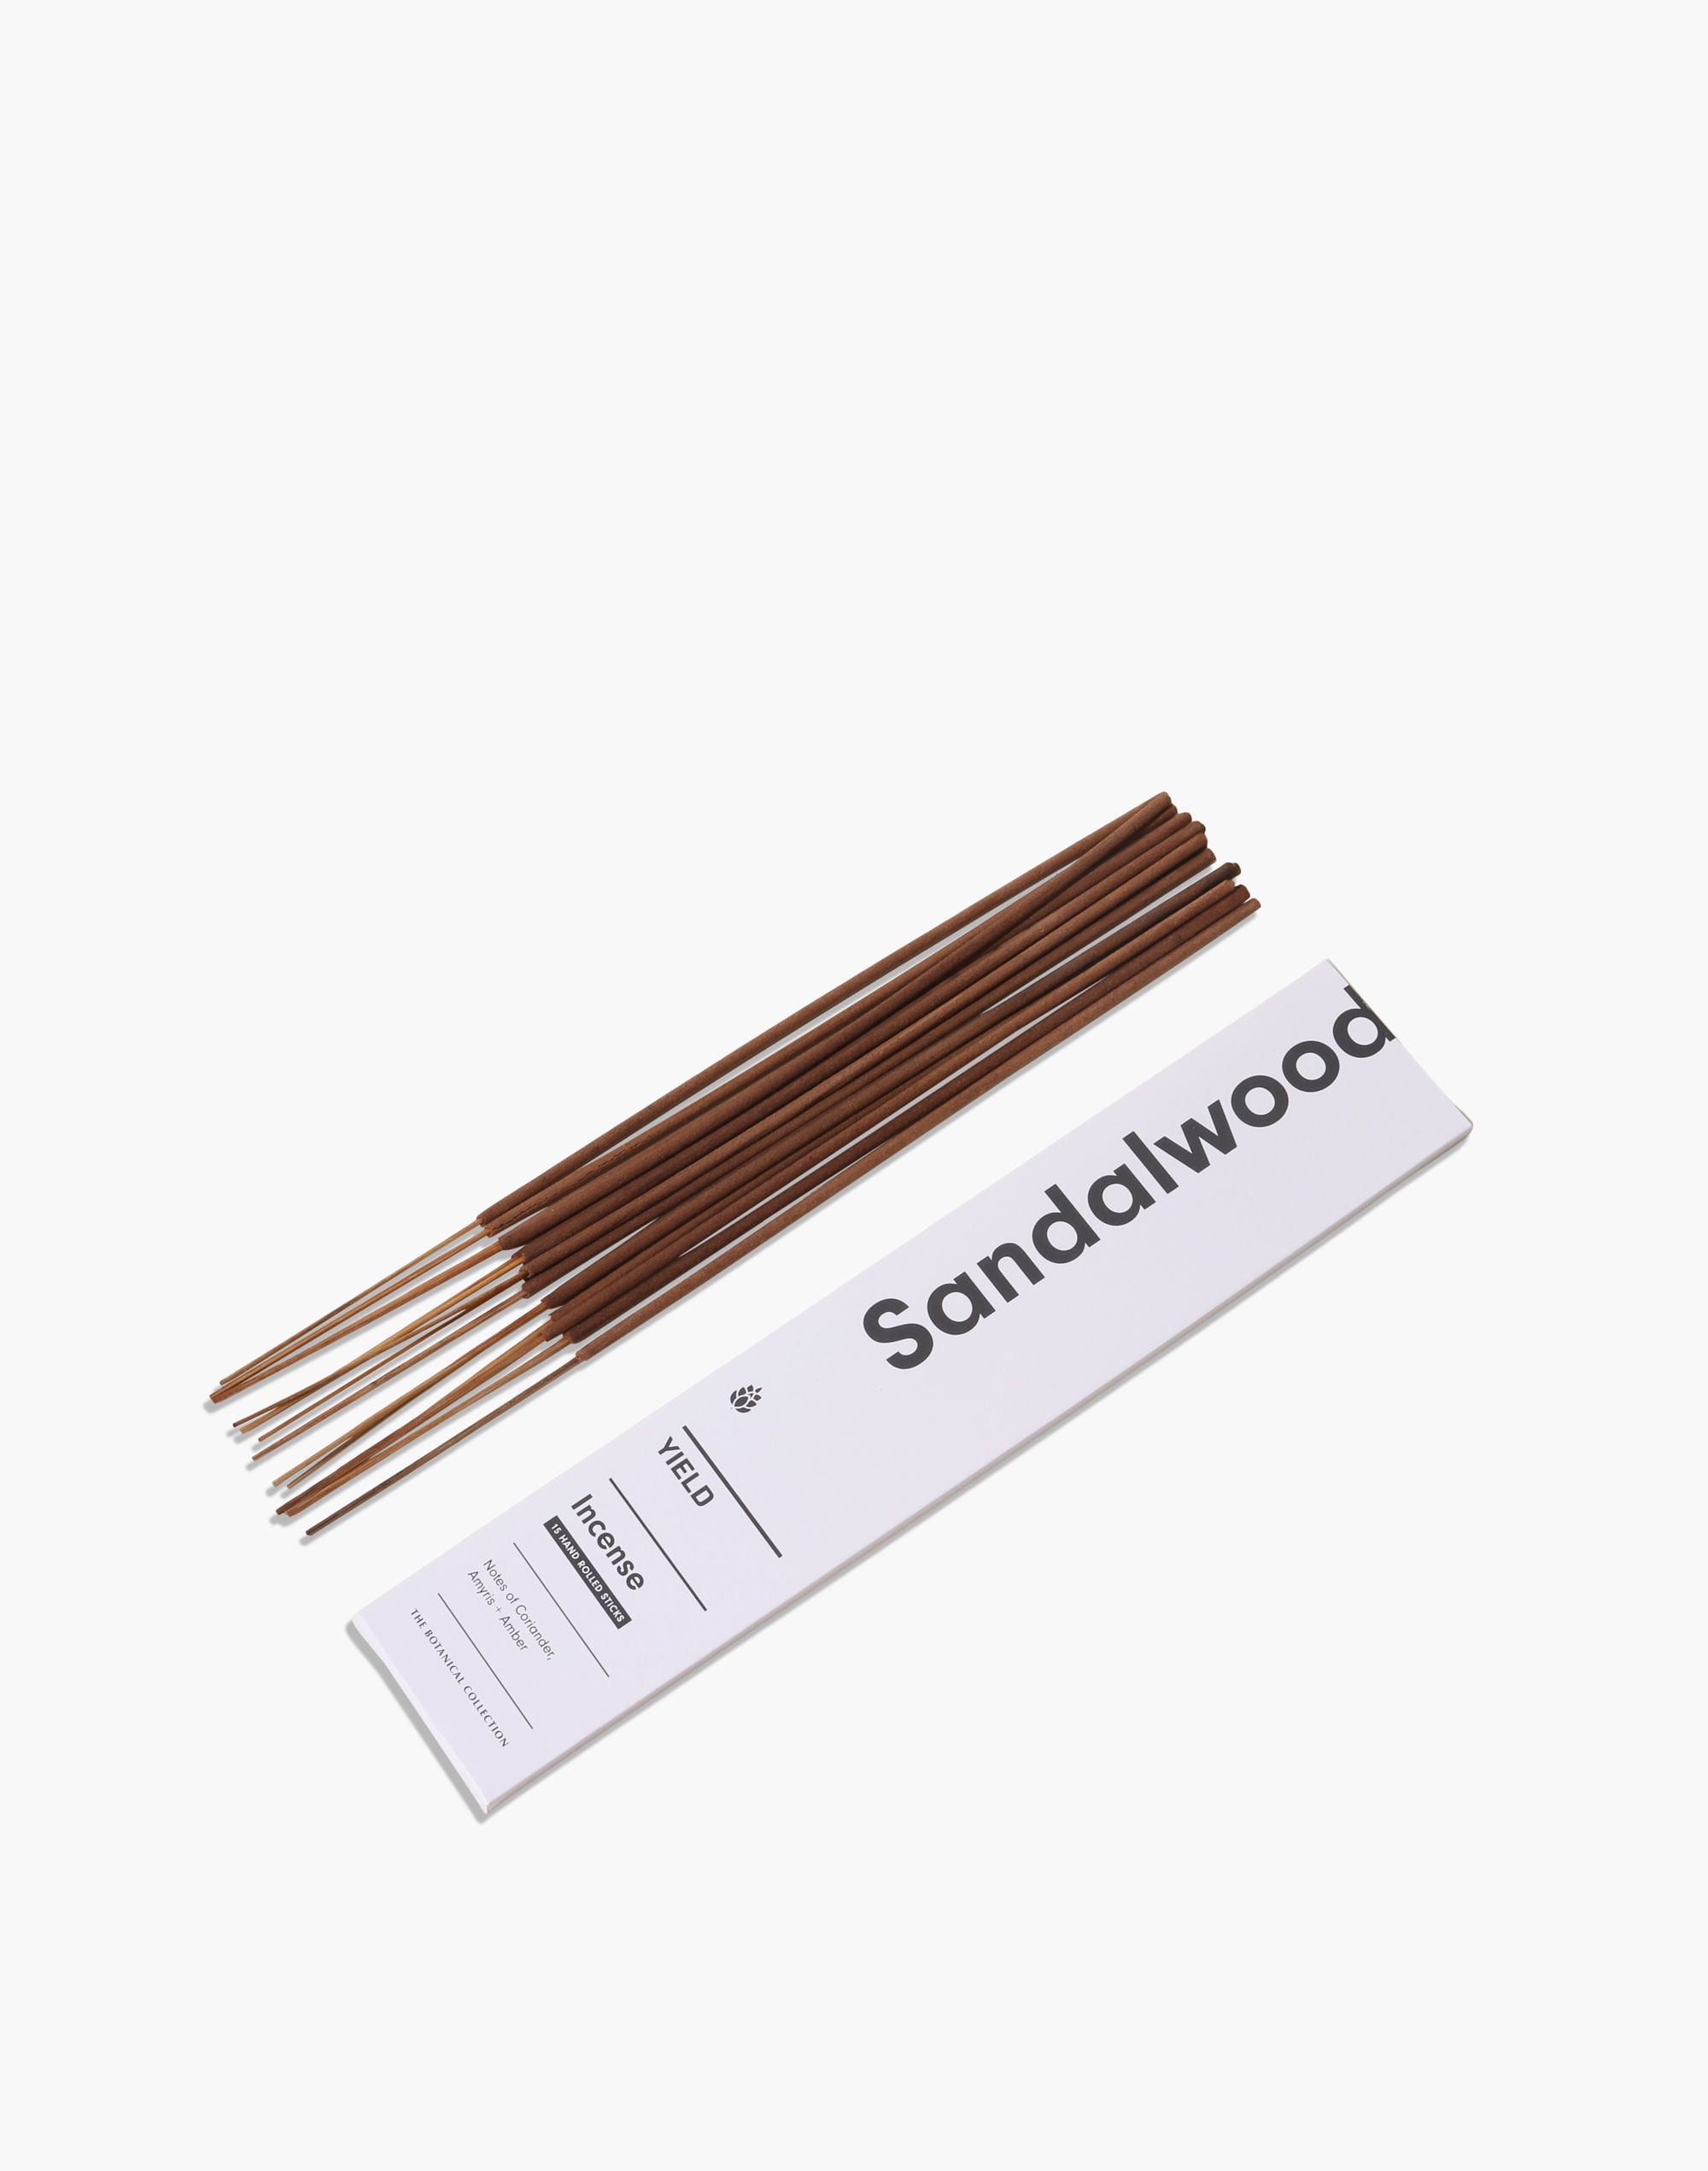 YIELD Sandalwood Incense